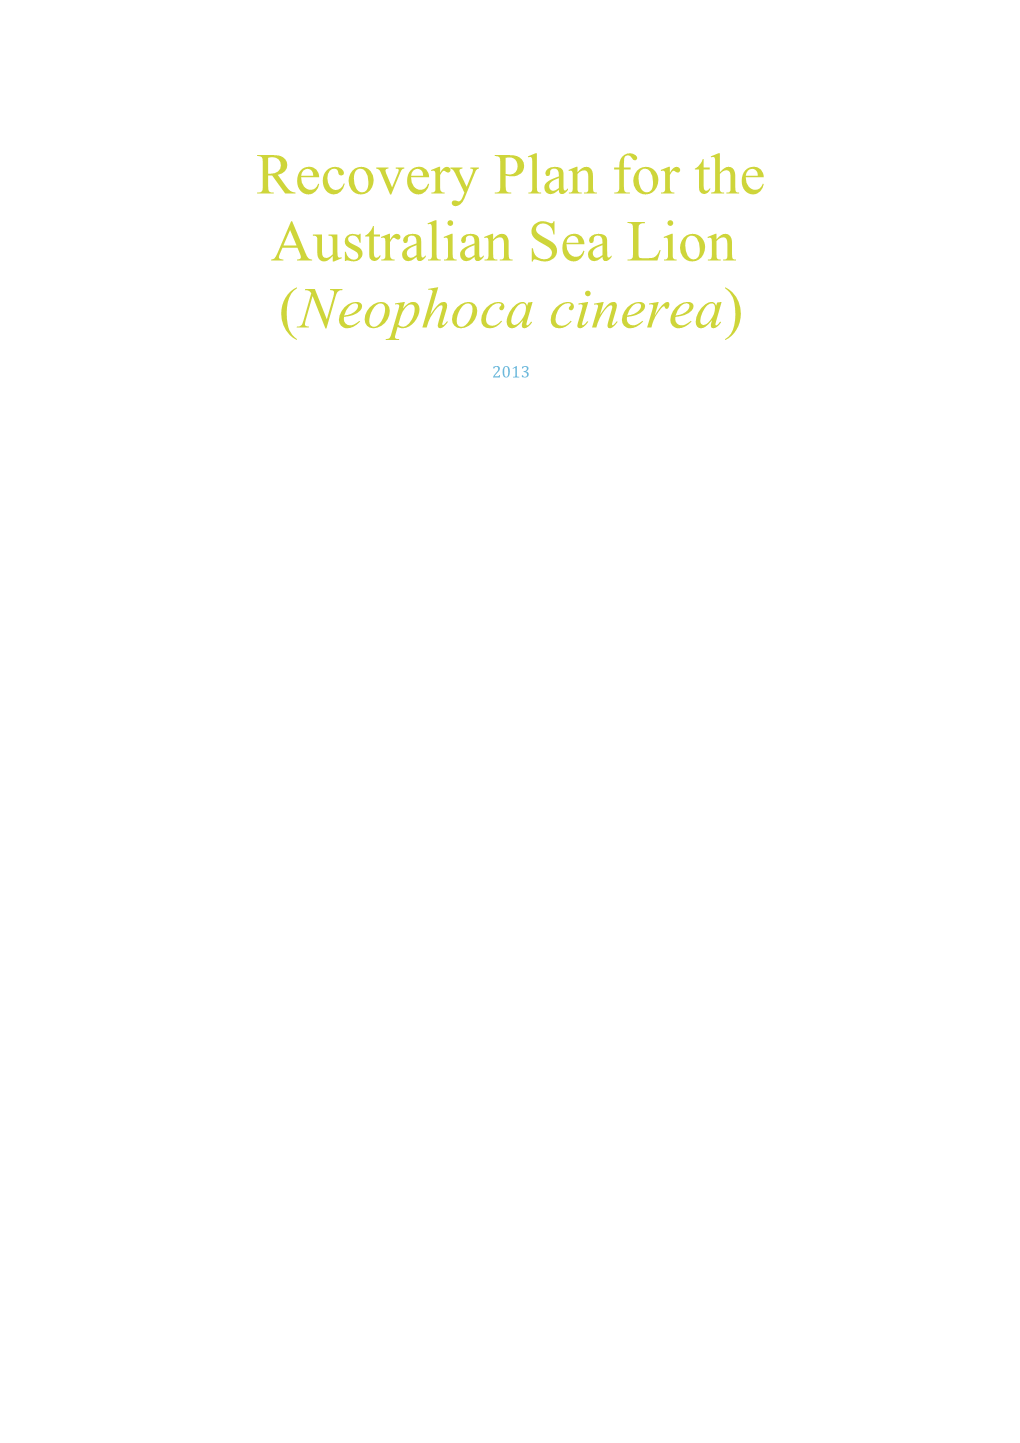 Recovery Plan for the Australian Sea Lion (Neophoca Cinerea)